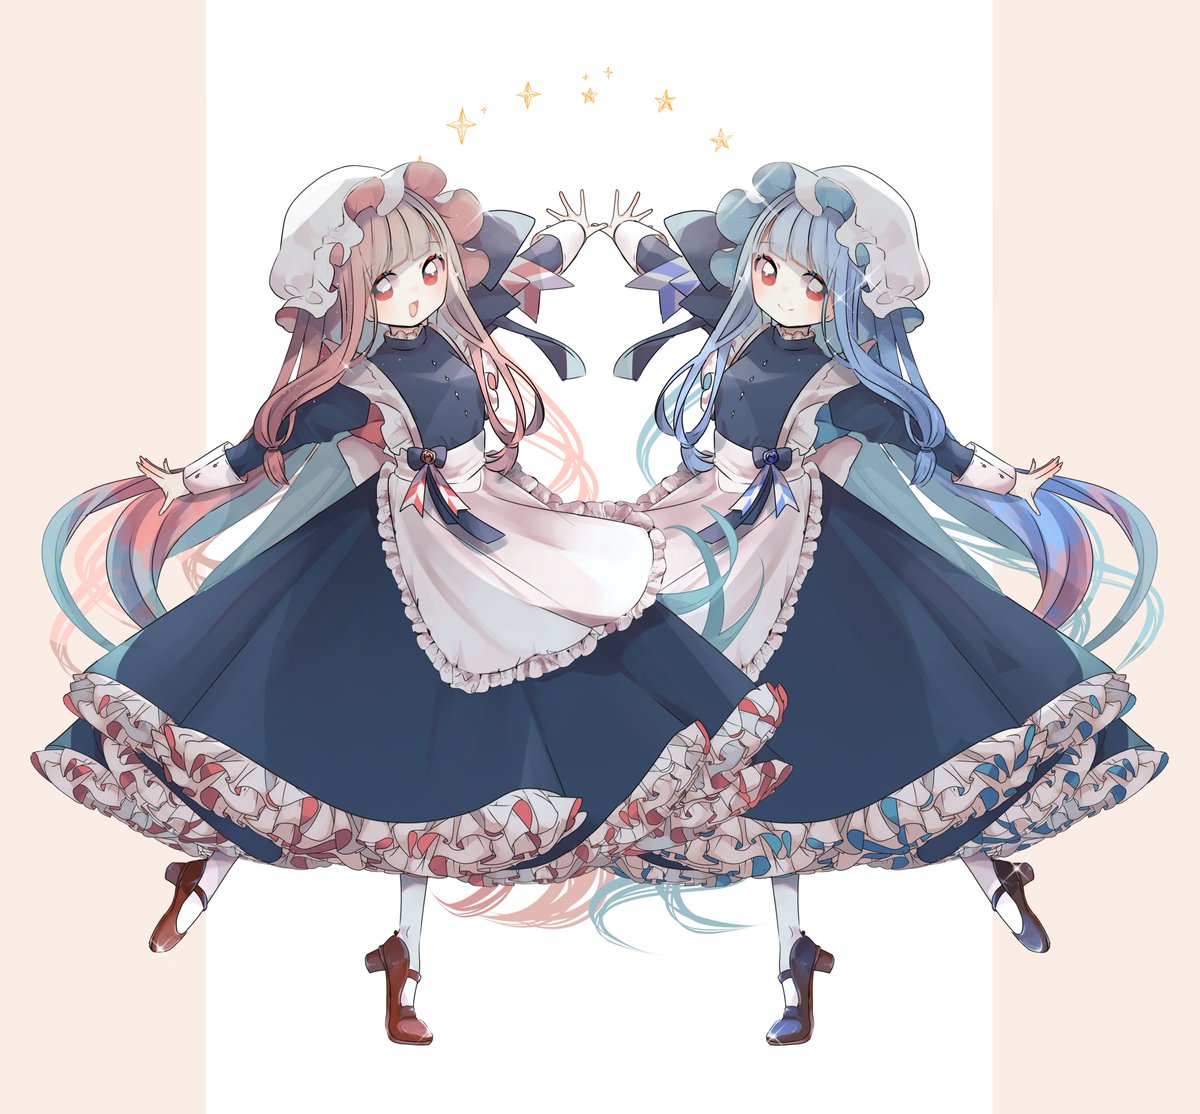 kotonoha akane ,kotonoha aoi multiple girls 2girls sisters siblings long hair mob cap blue hair  illustration images